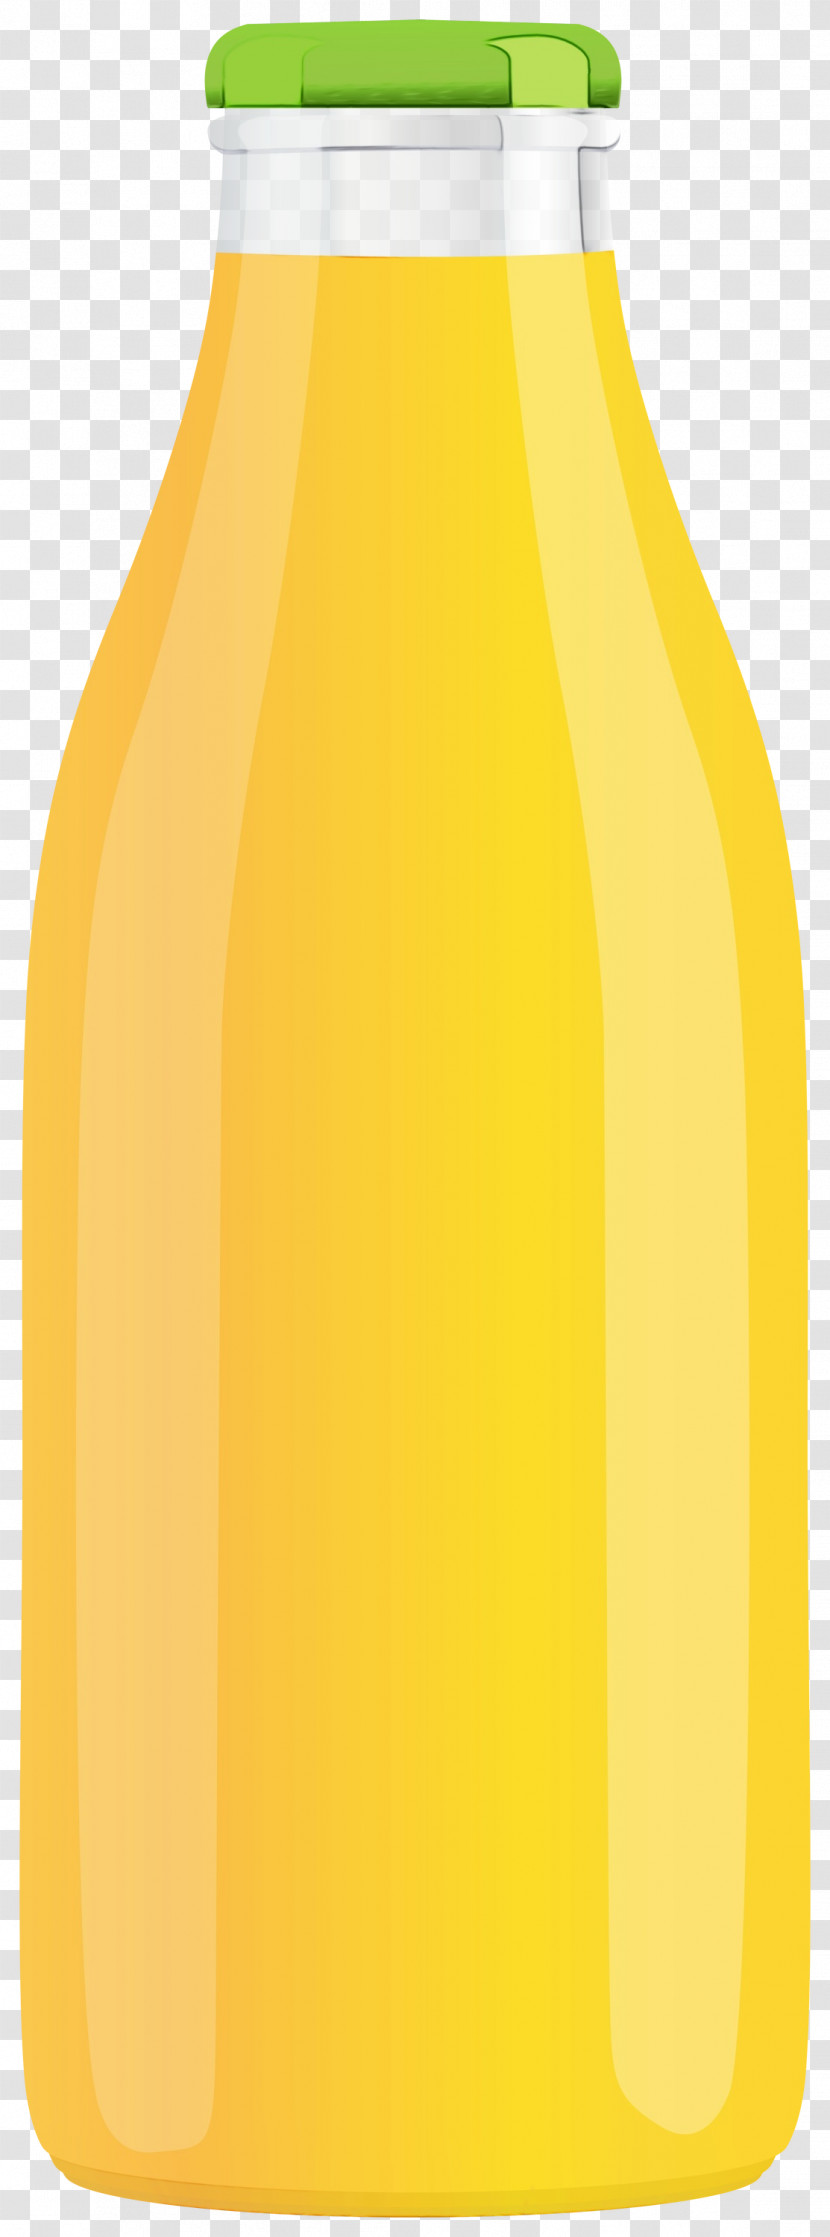 Glass Bottle Bottle Yellow Glass Fruit Transparent PNG